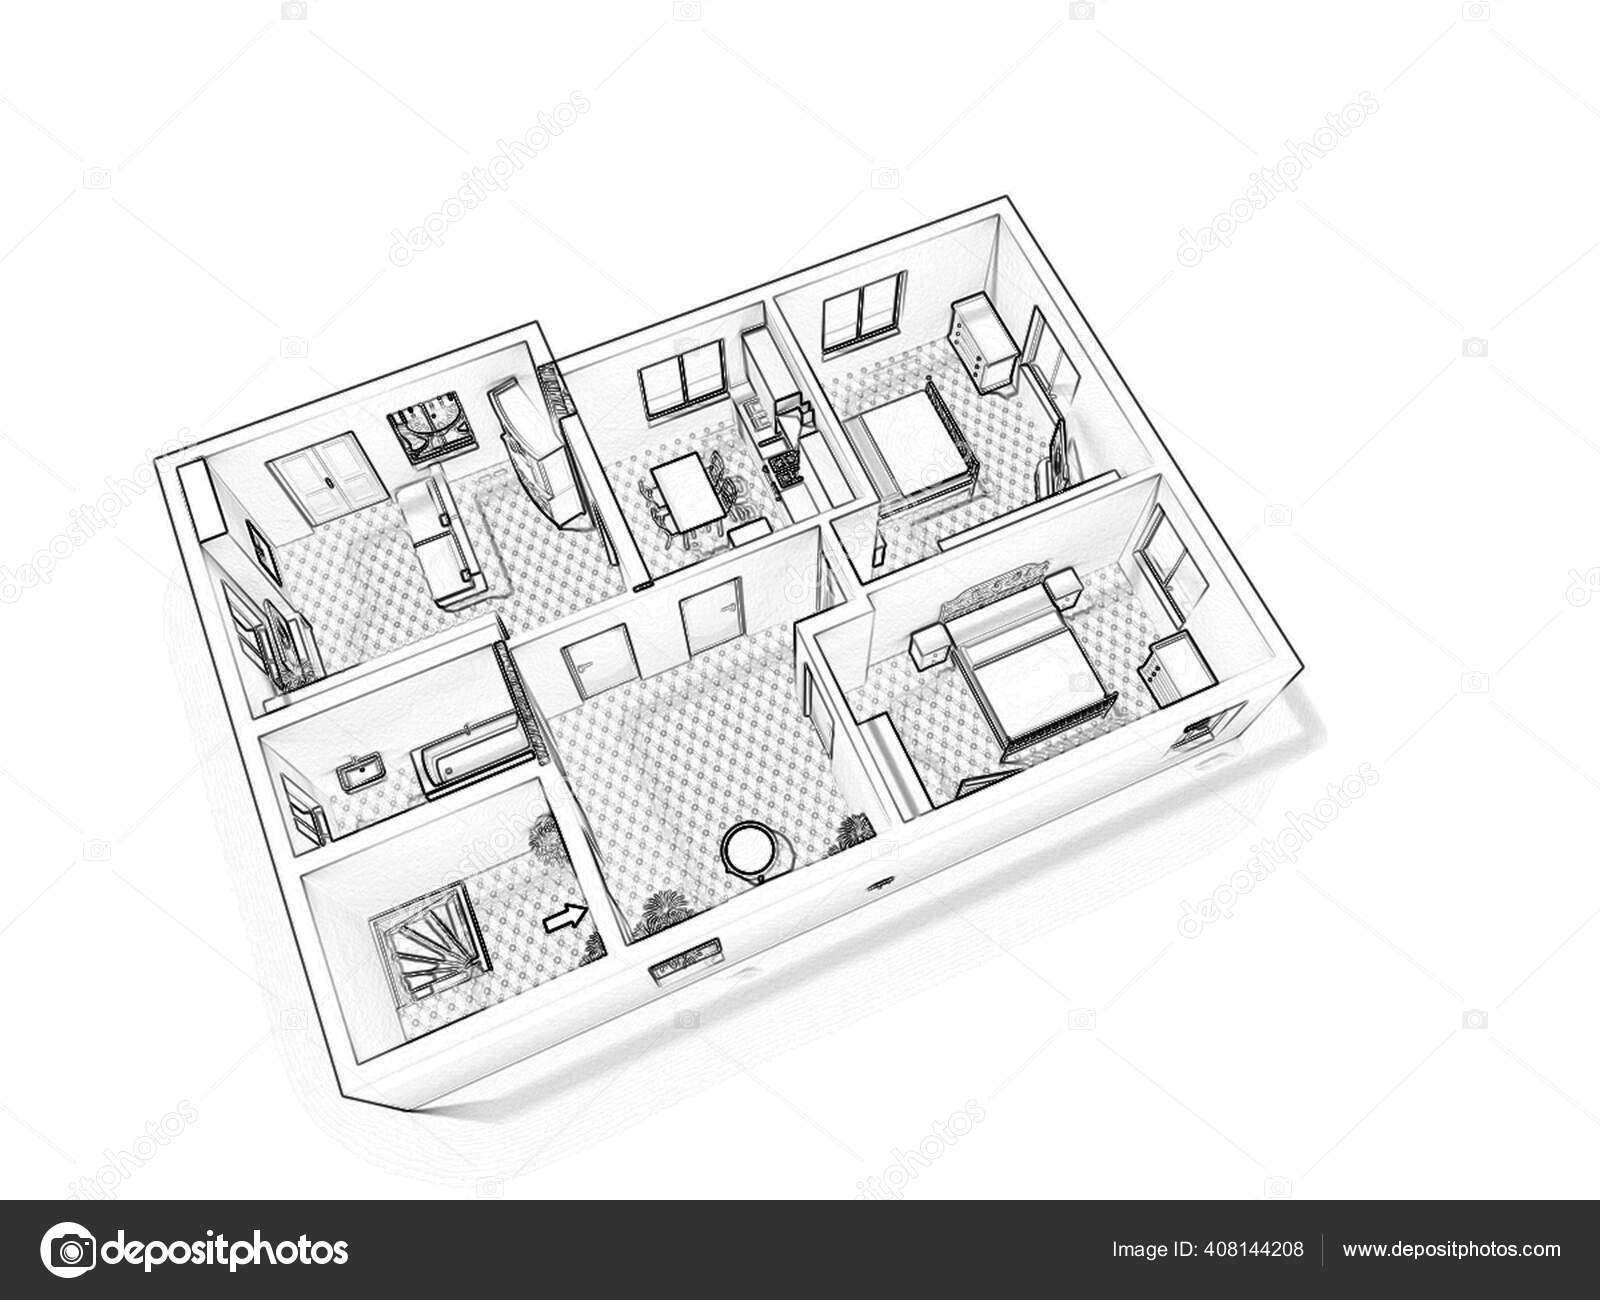 Create a 3D Floor Plan of an Interior Room Using RoomPlan